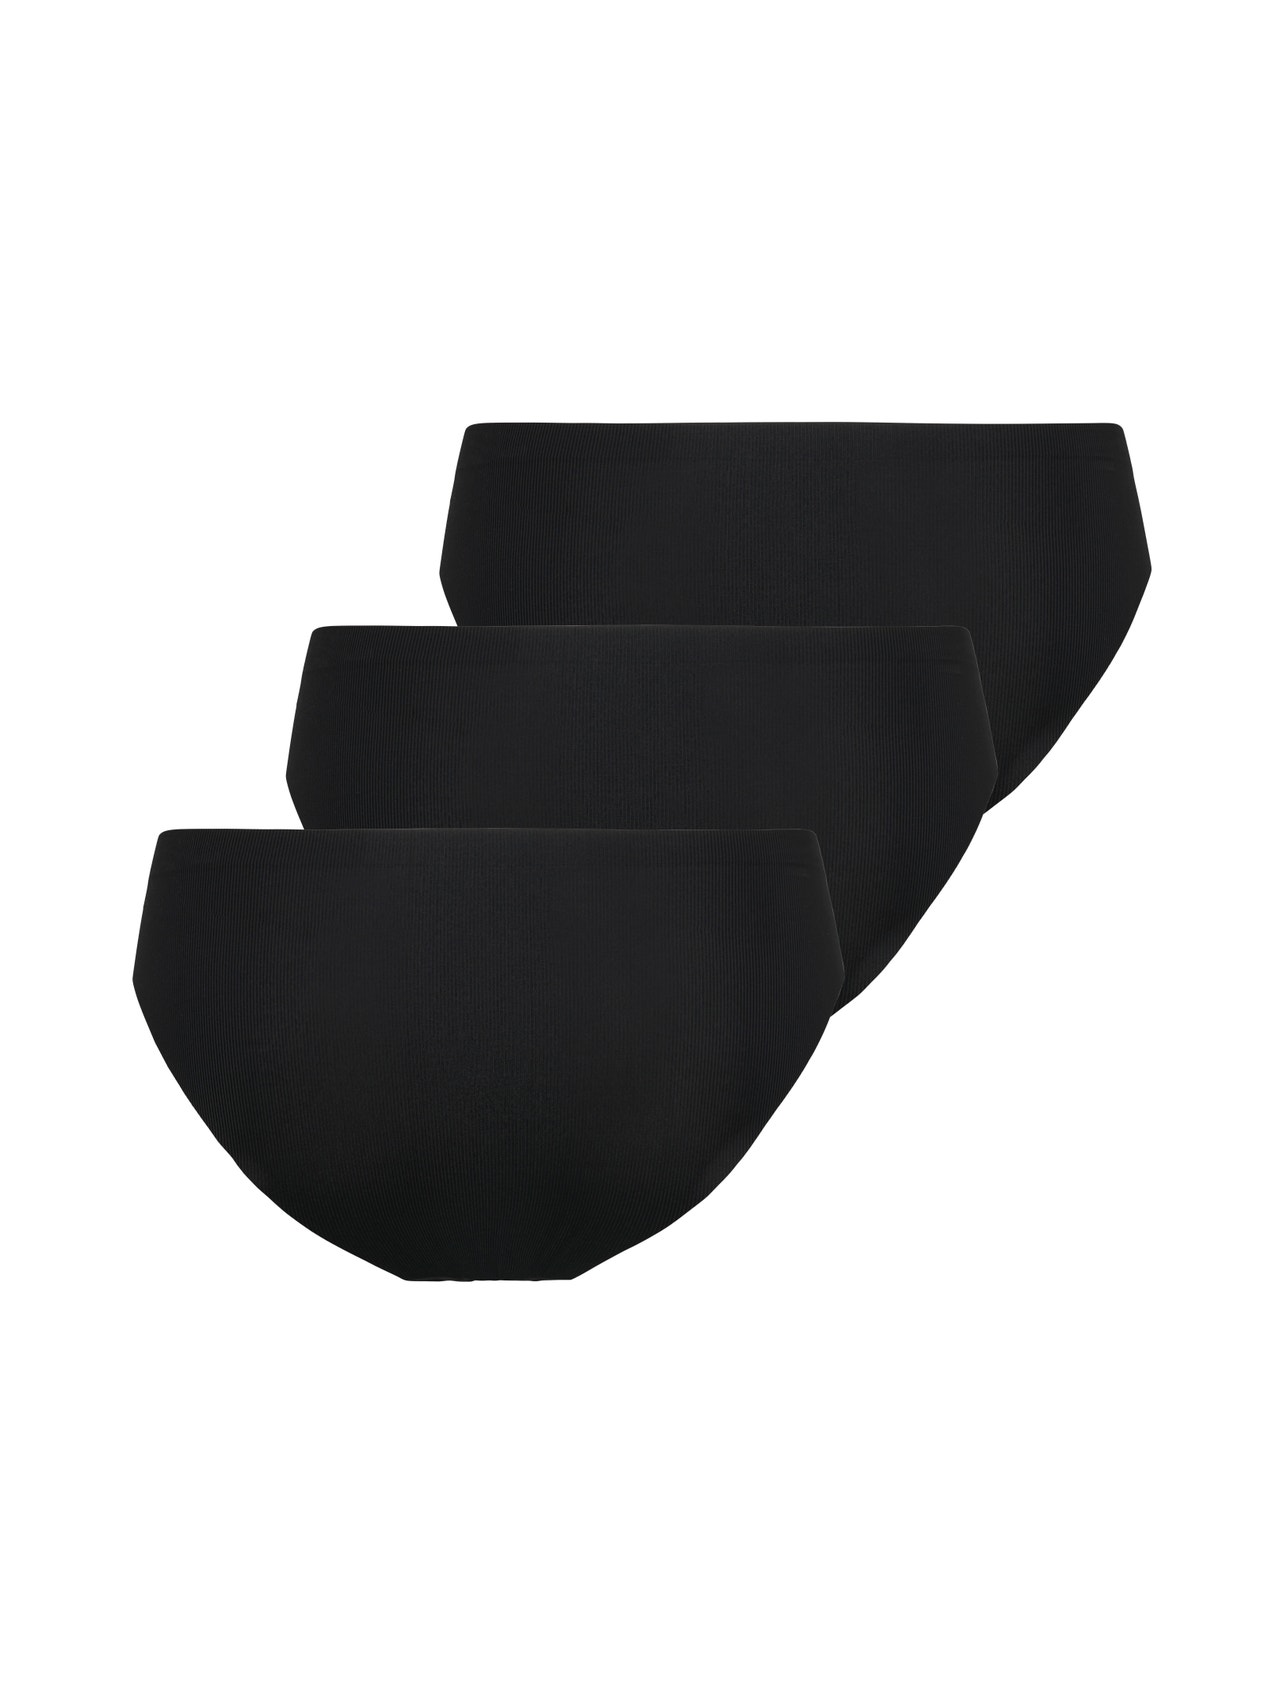 ONLY Niedrige Taille Unterhose -Black - 15301150